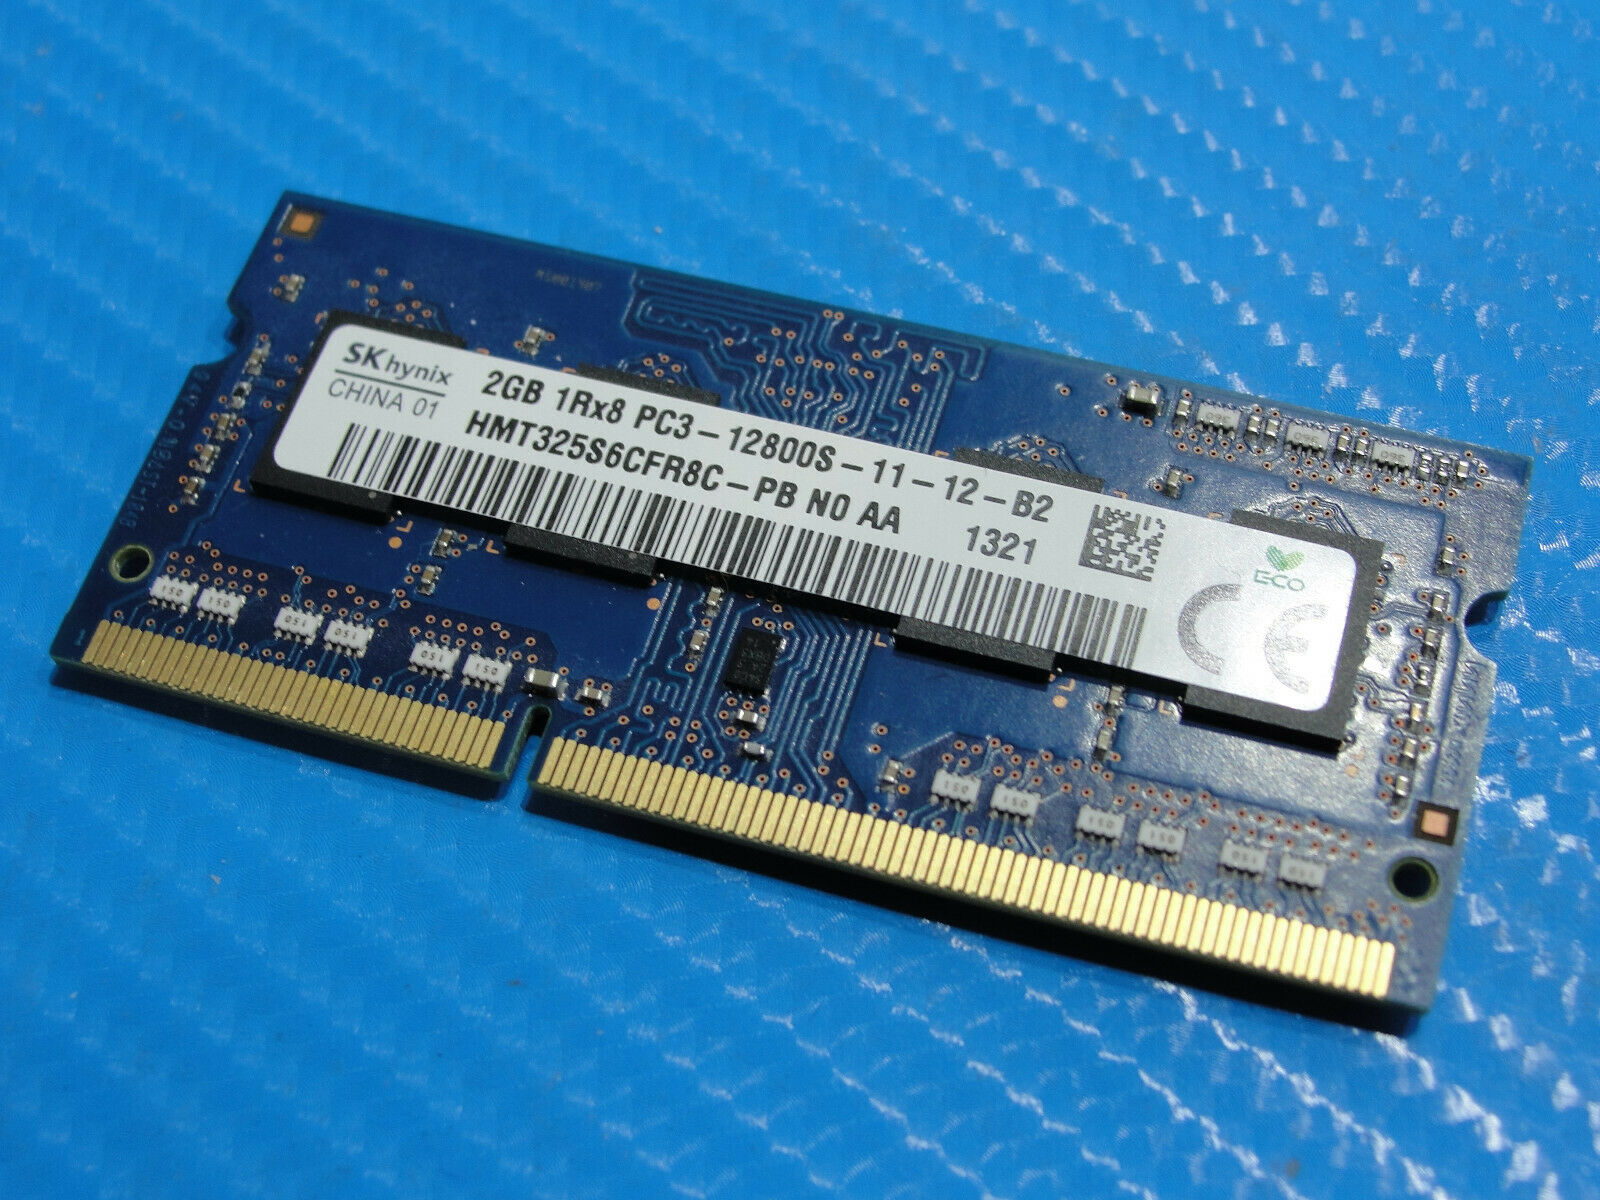 Lenovo P500 Laptop Hynix 2GB Memory Ram PC3-12800S-11-12-B2 HMT325S6CFR8C-PB Hynix